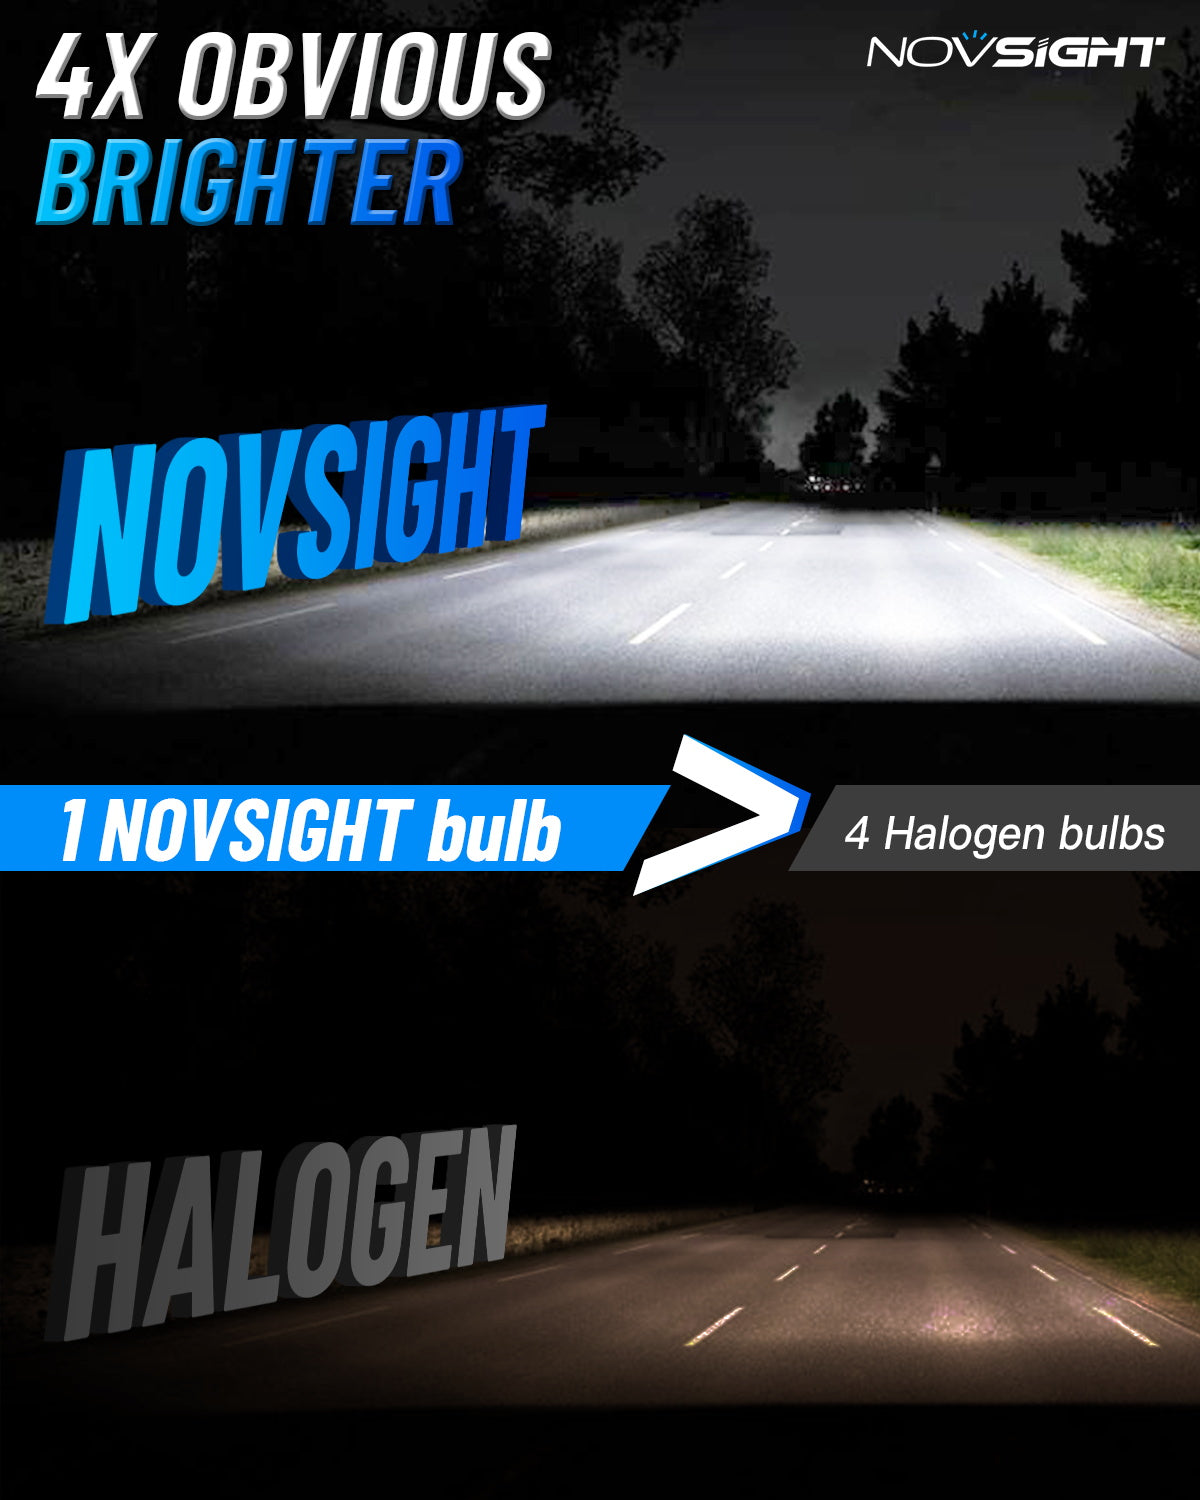 Vehicles & Parts, 4pc (H1+H7 x 2) Halogen Xenon look White light bulbs